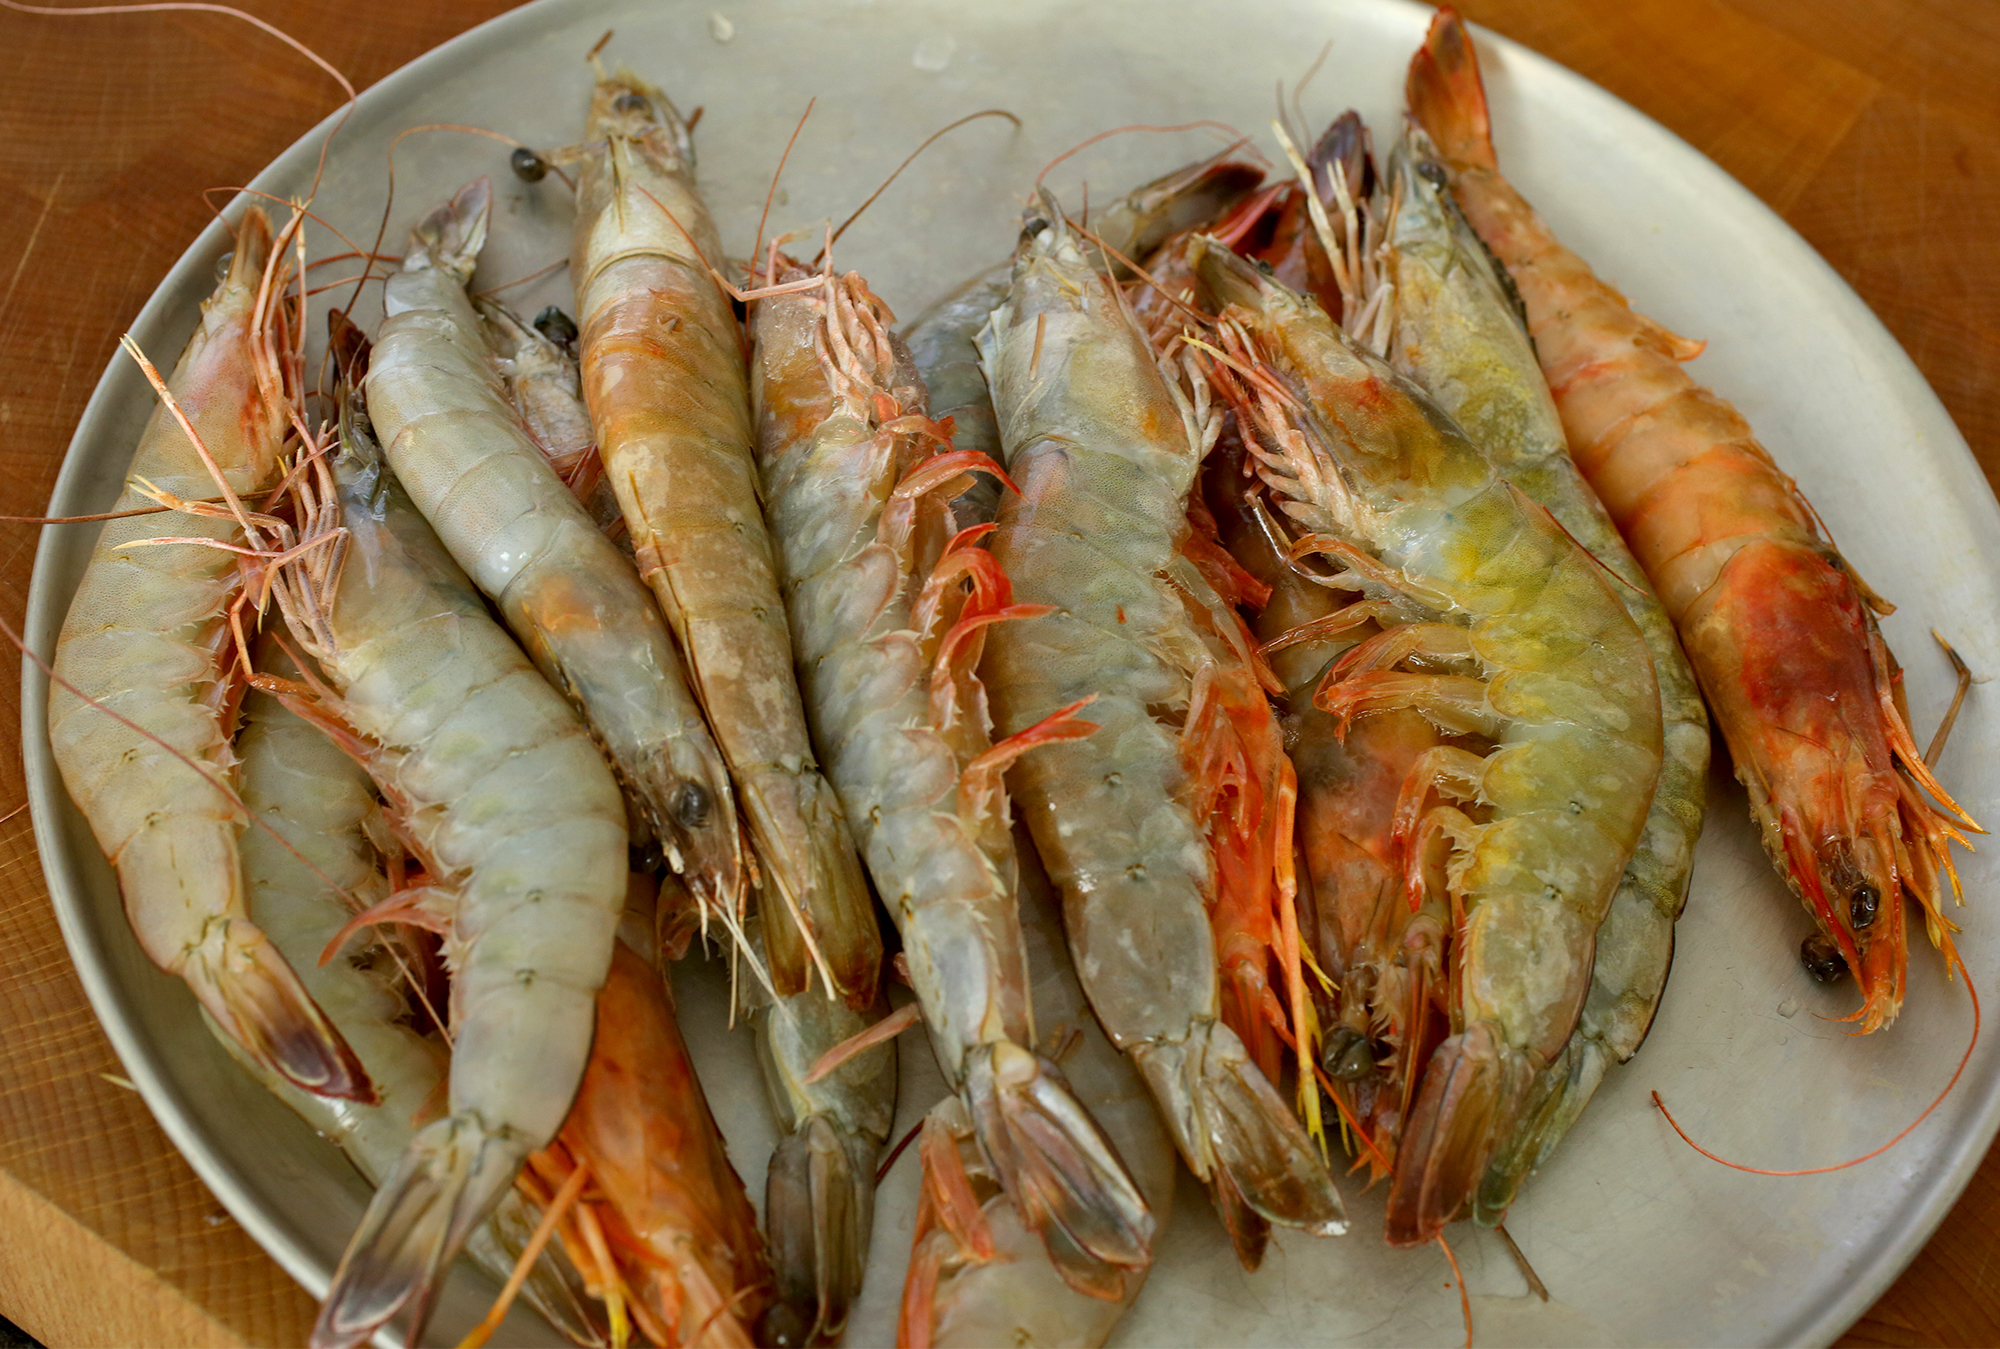 Amazing Shrimp Pictures & Backgrounds